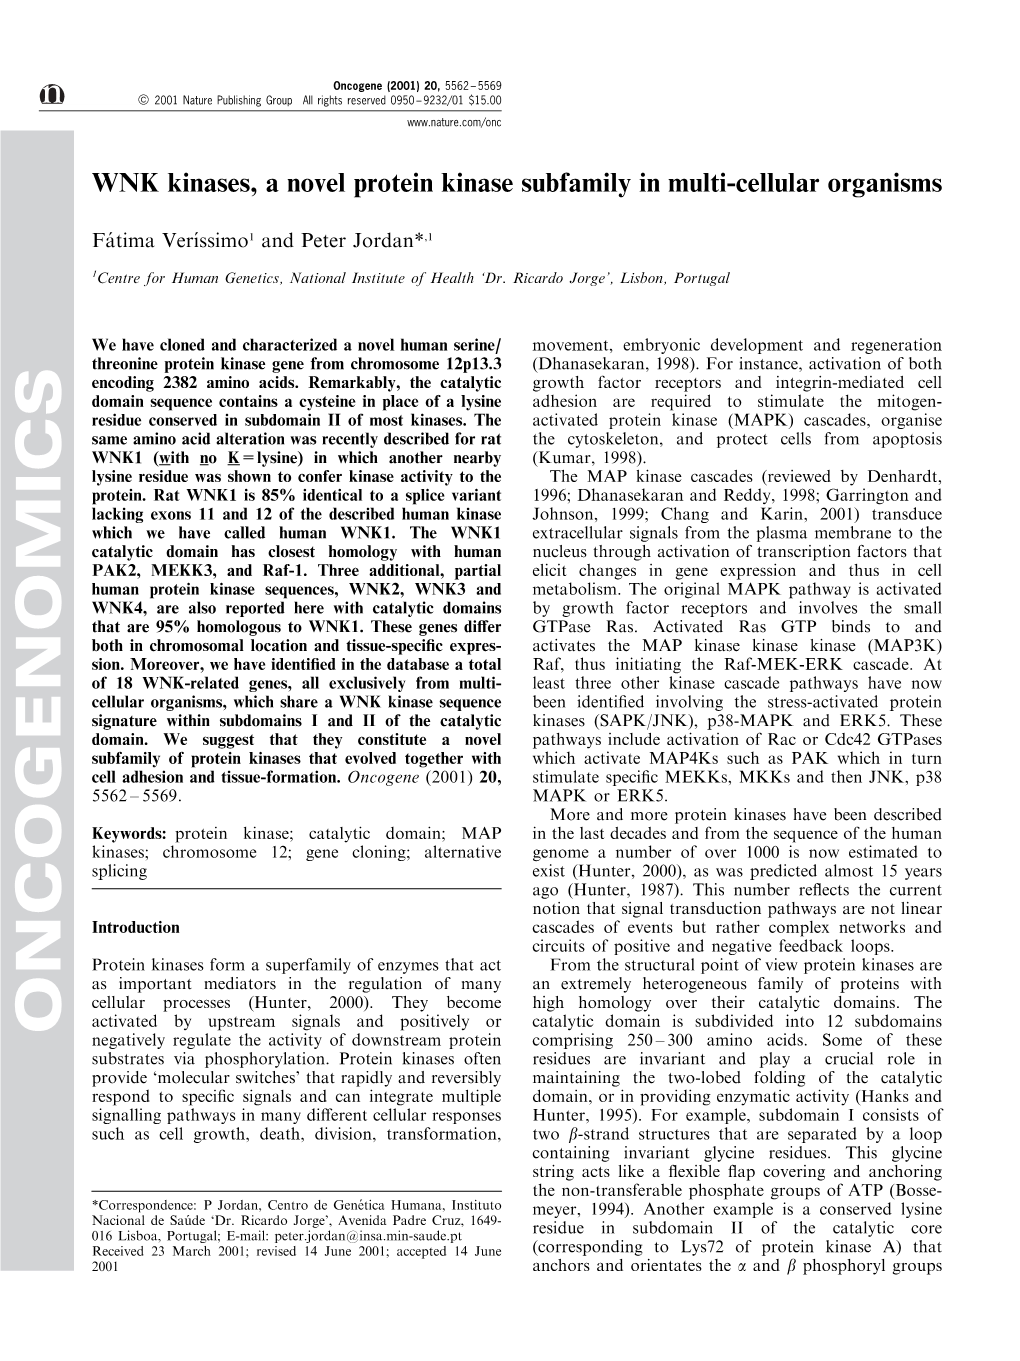 WNK Kinases, a Novel Protein Kinase Subfamily in Multi-Cellular Organisms